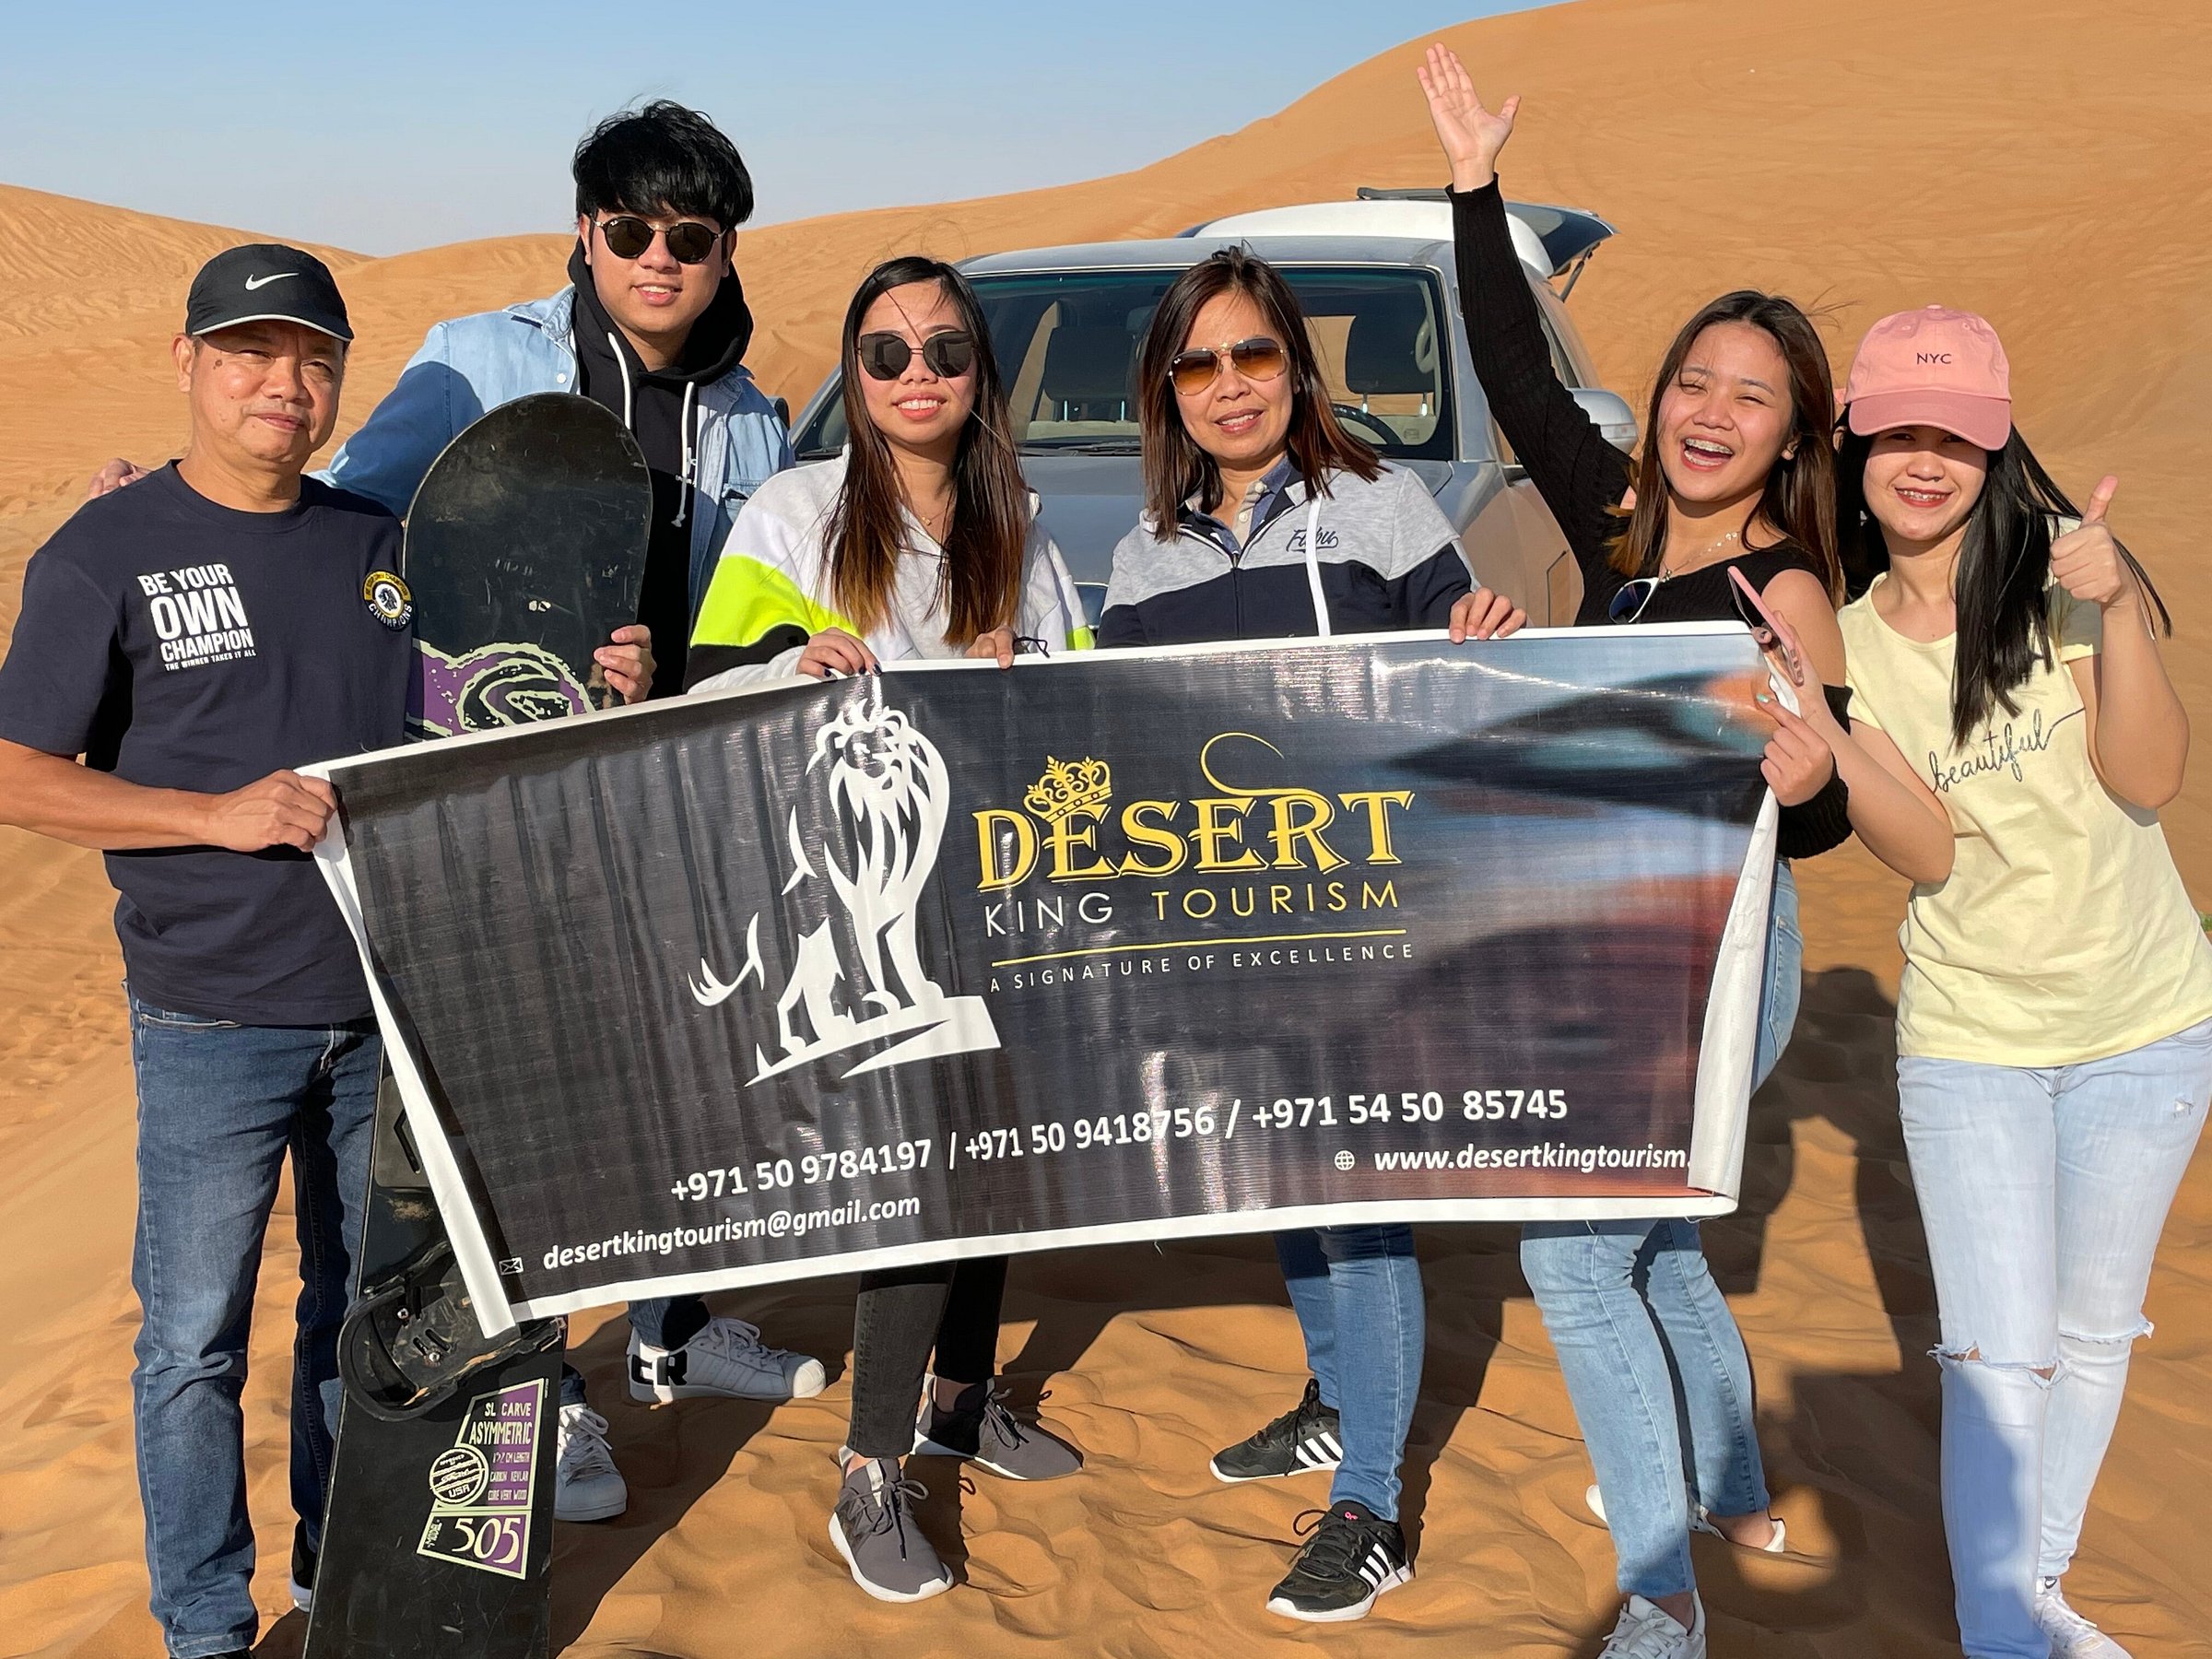 desert king tourism reviews